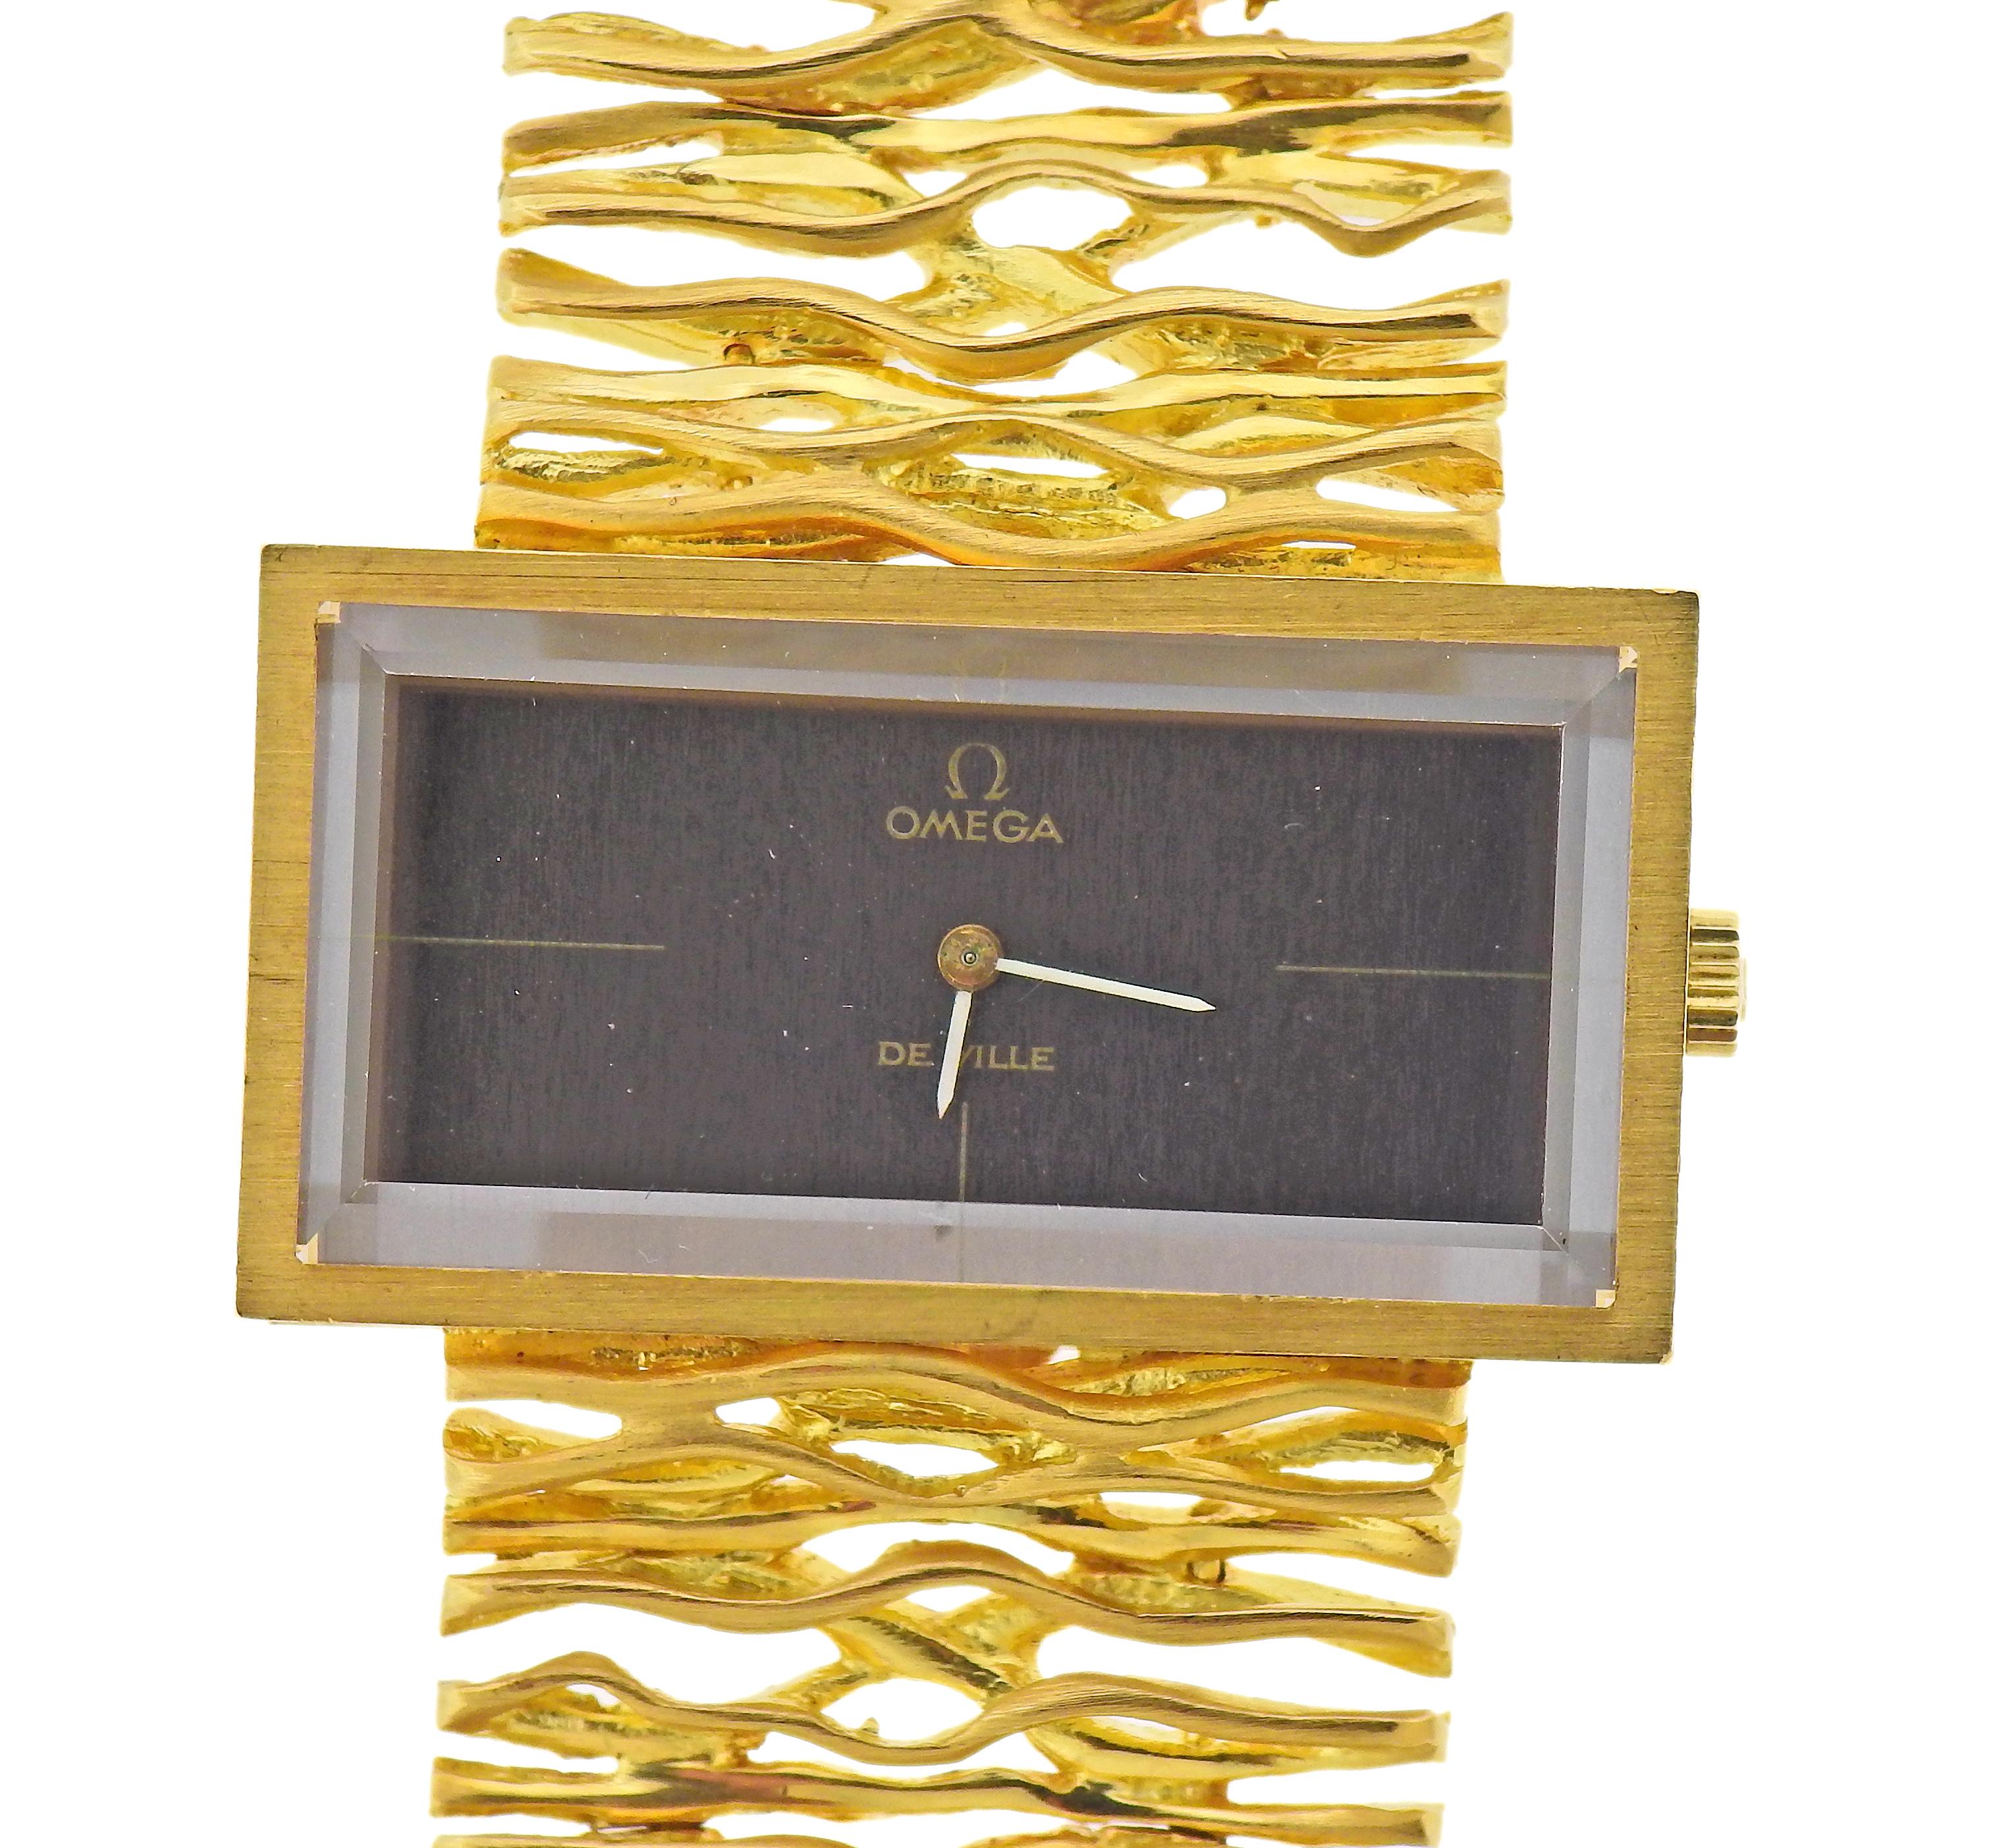 Vintage, circa 1970s 18k gold watch bracelet by Omega, with brown dial signed Omega. Bracelet is 7.25